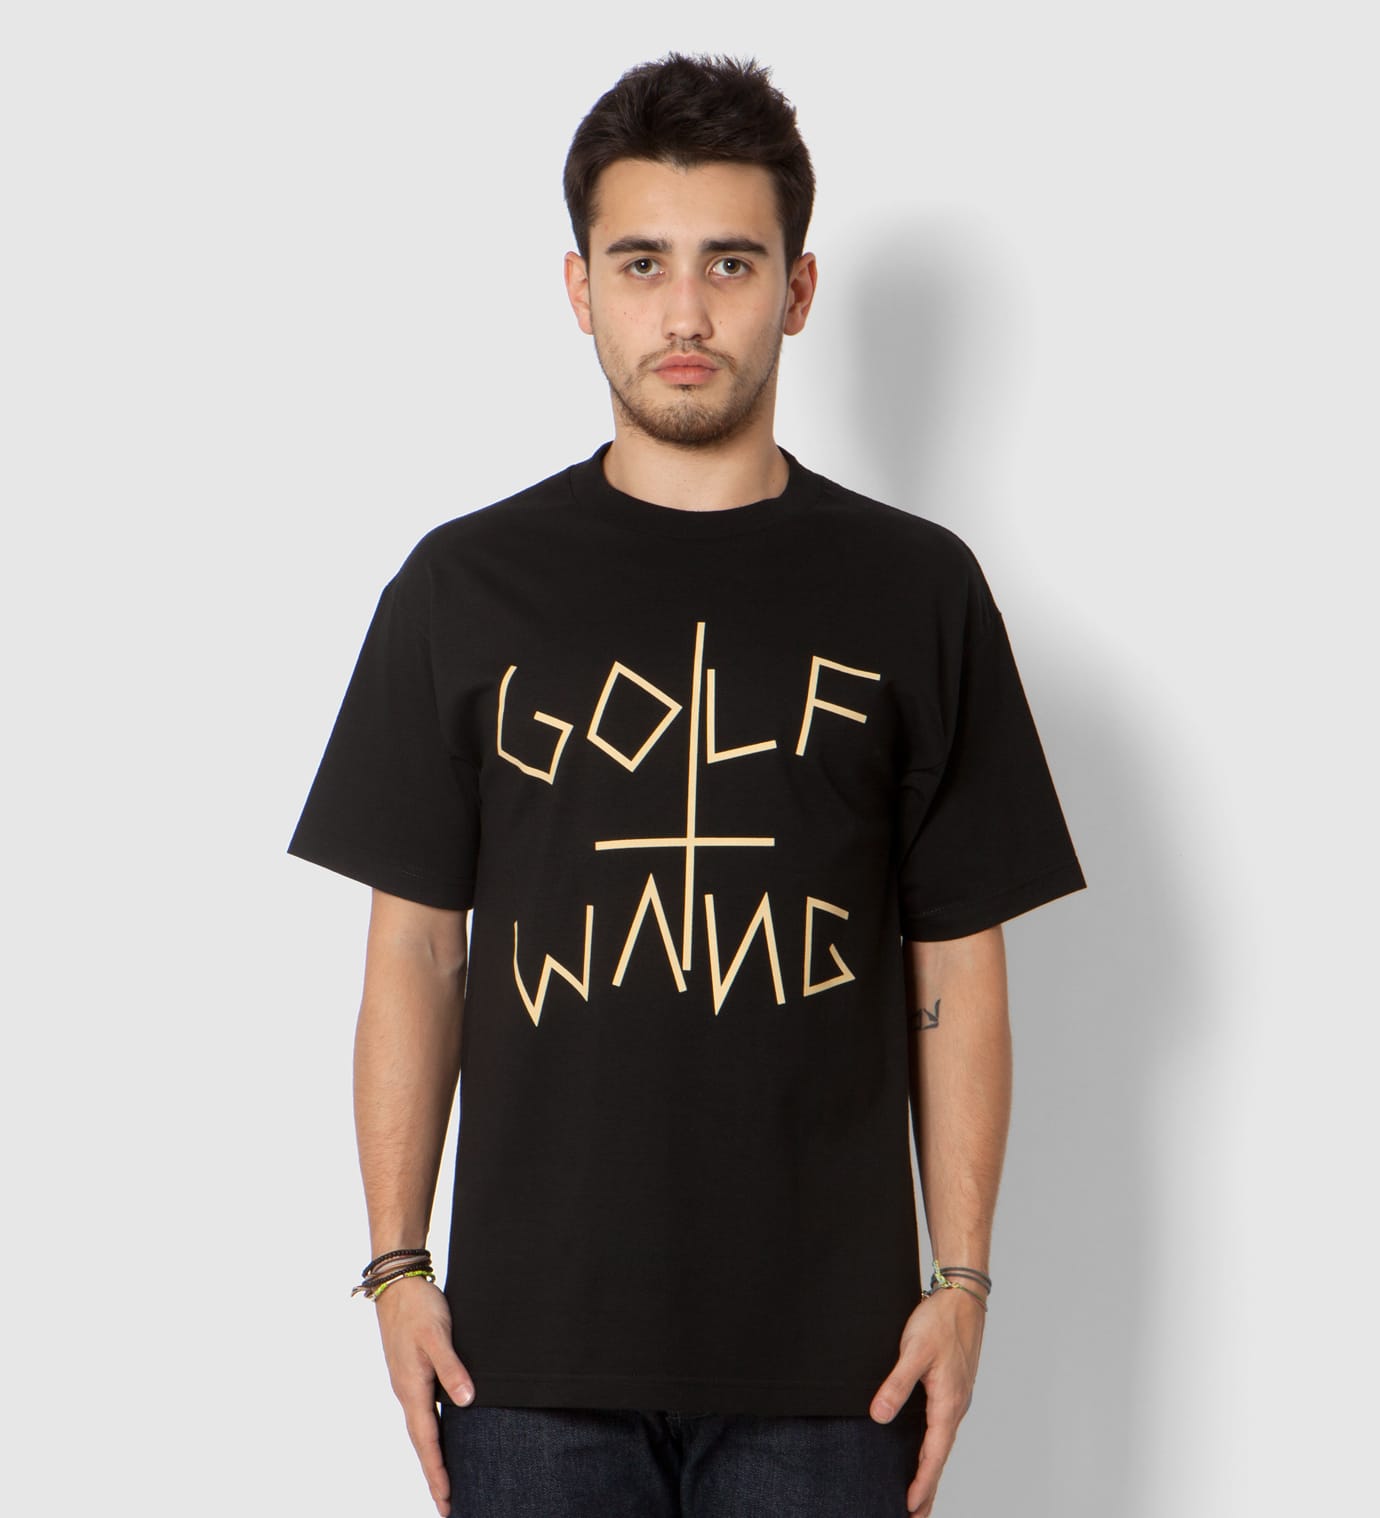 golf wang GOLF WANG シャツ